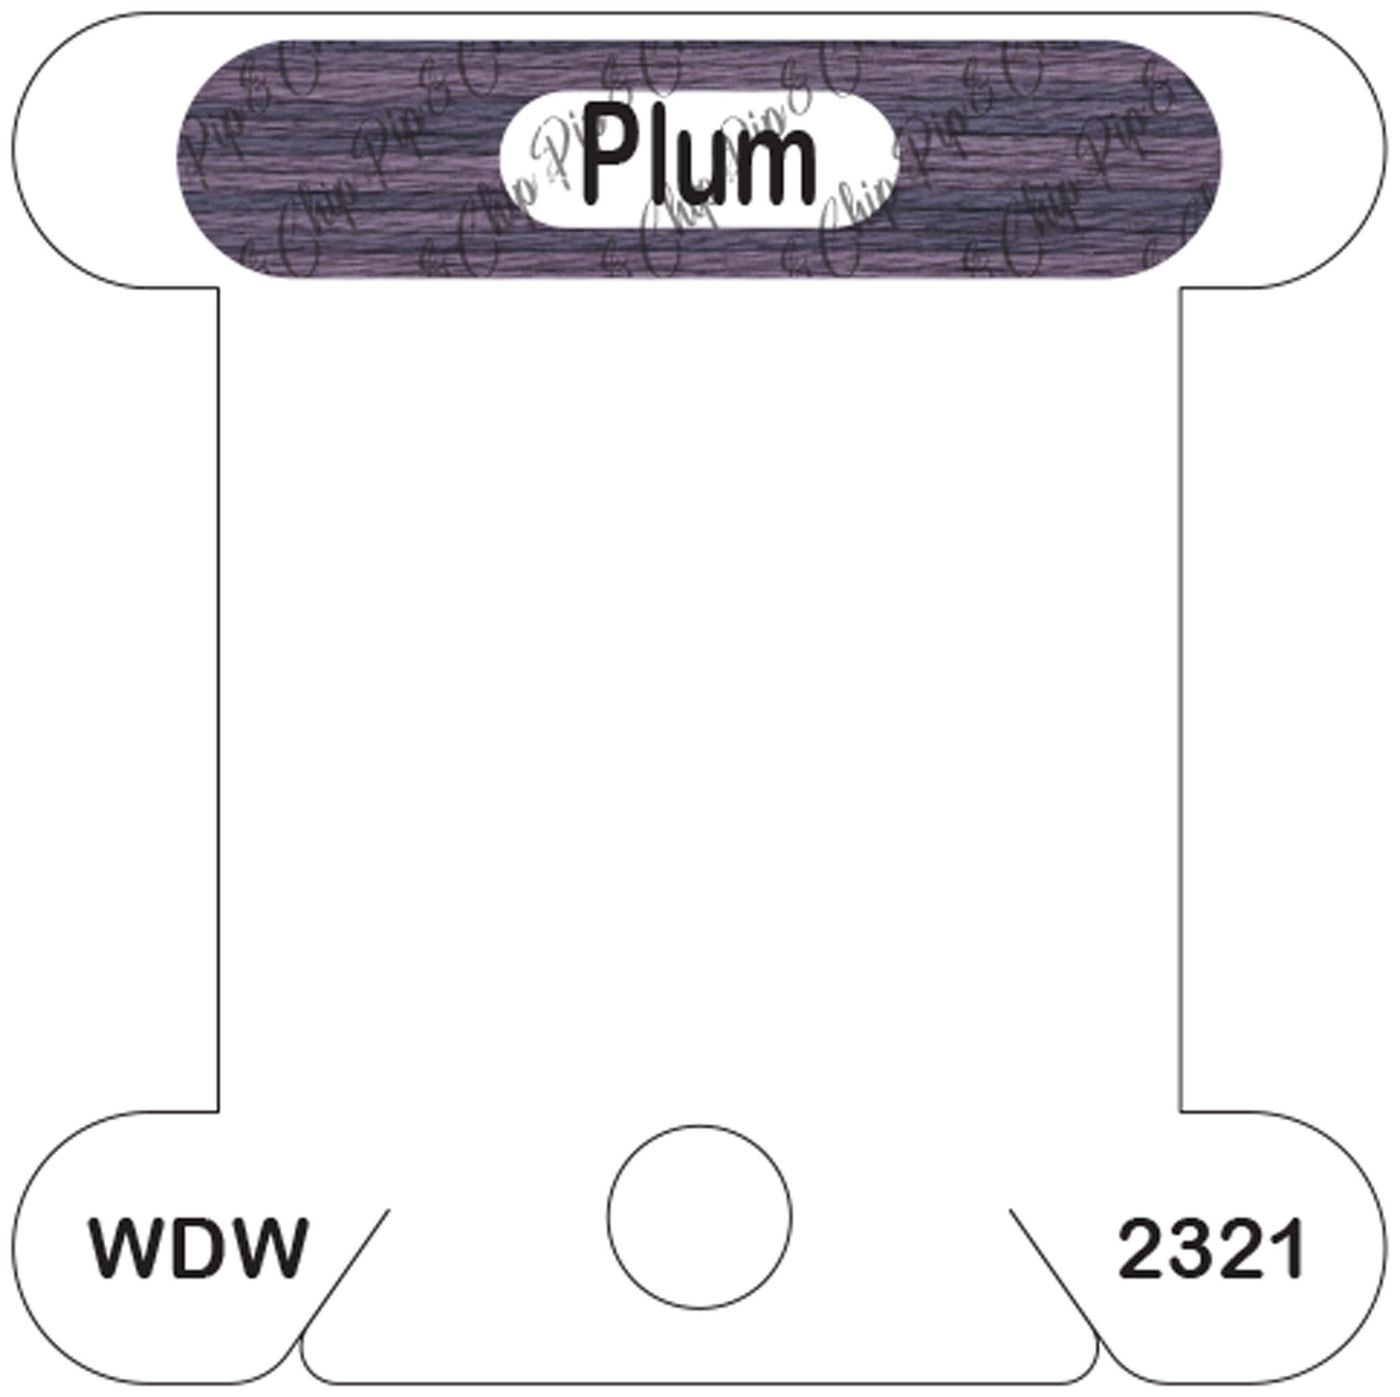 WDW Plum acrylic bobbin